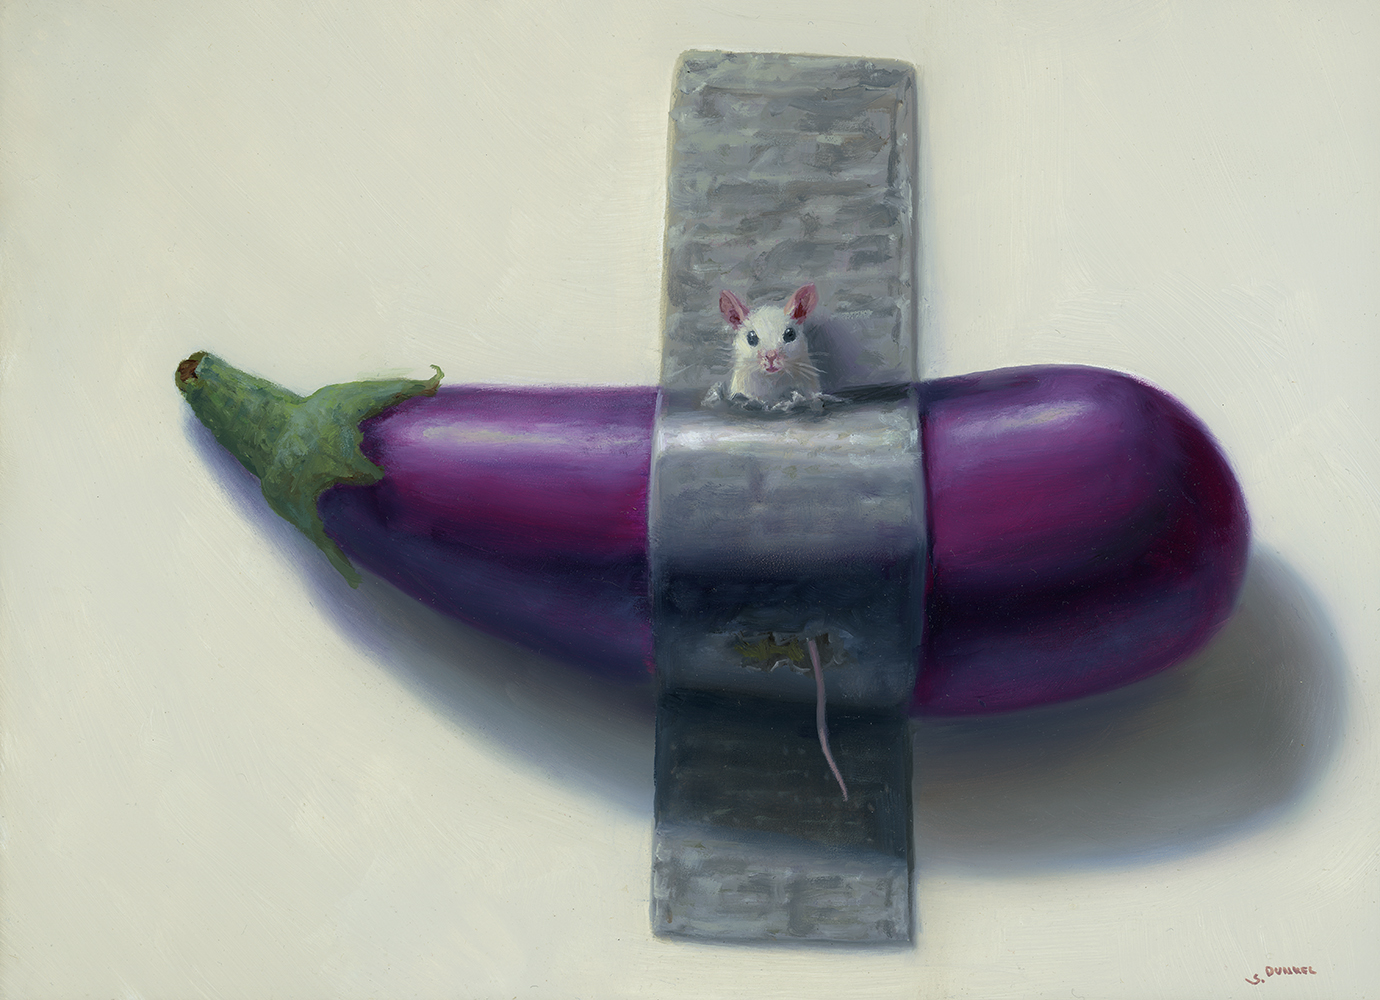 Top Eggplant - Dunkel Stuart